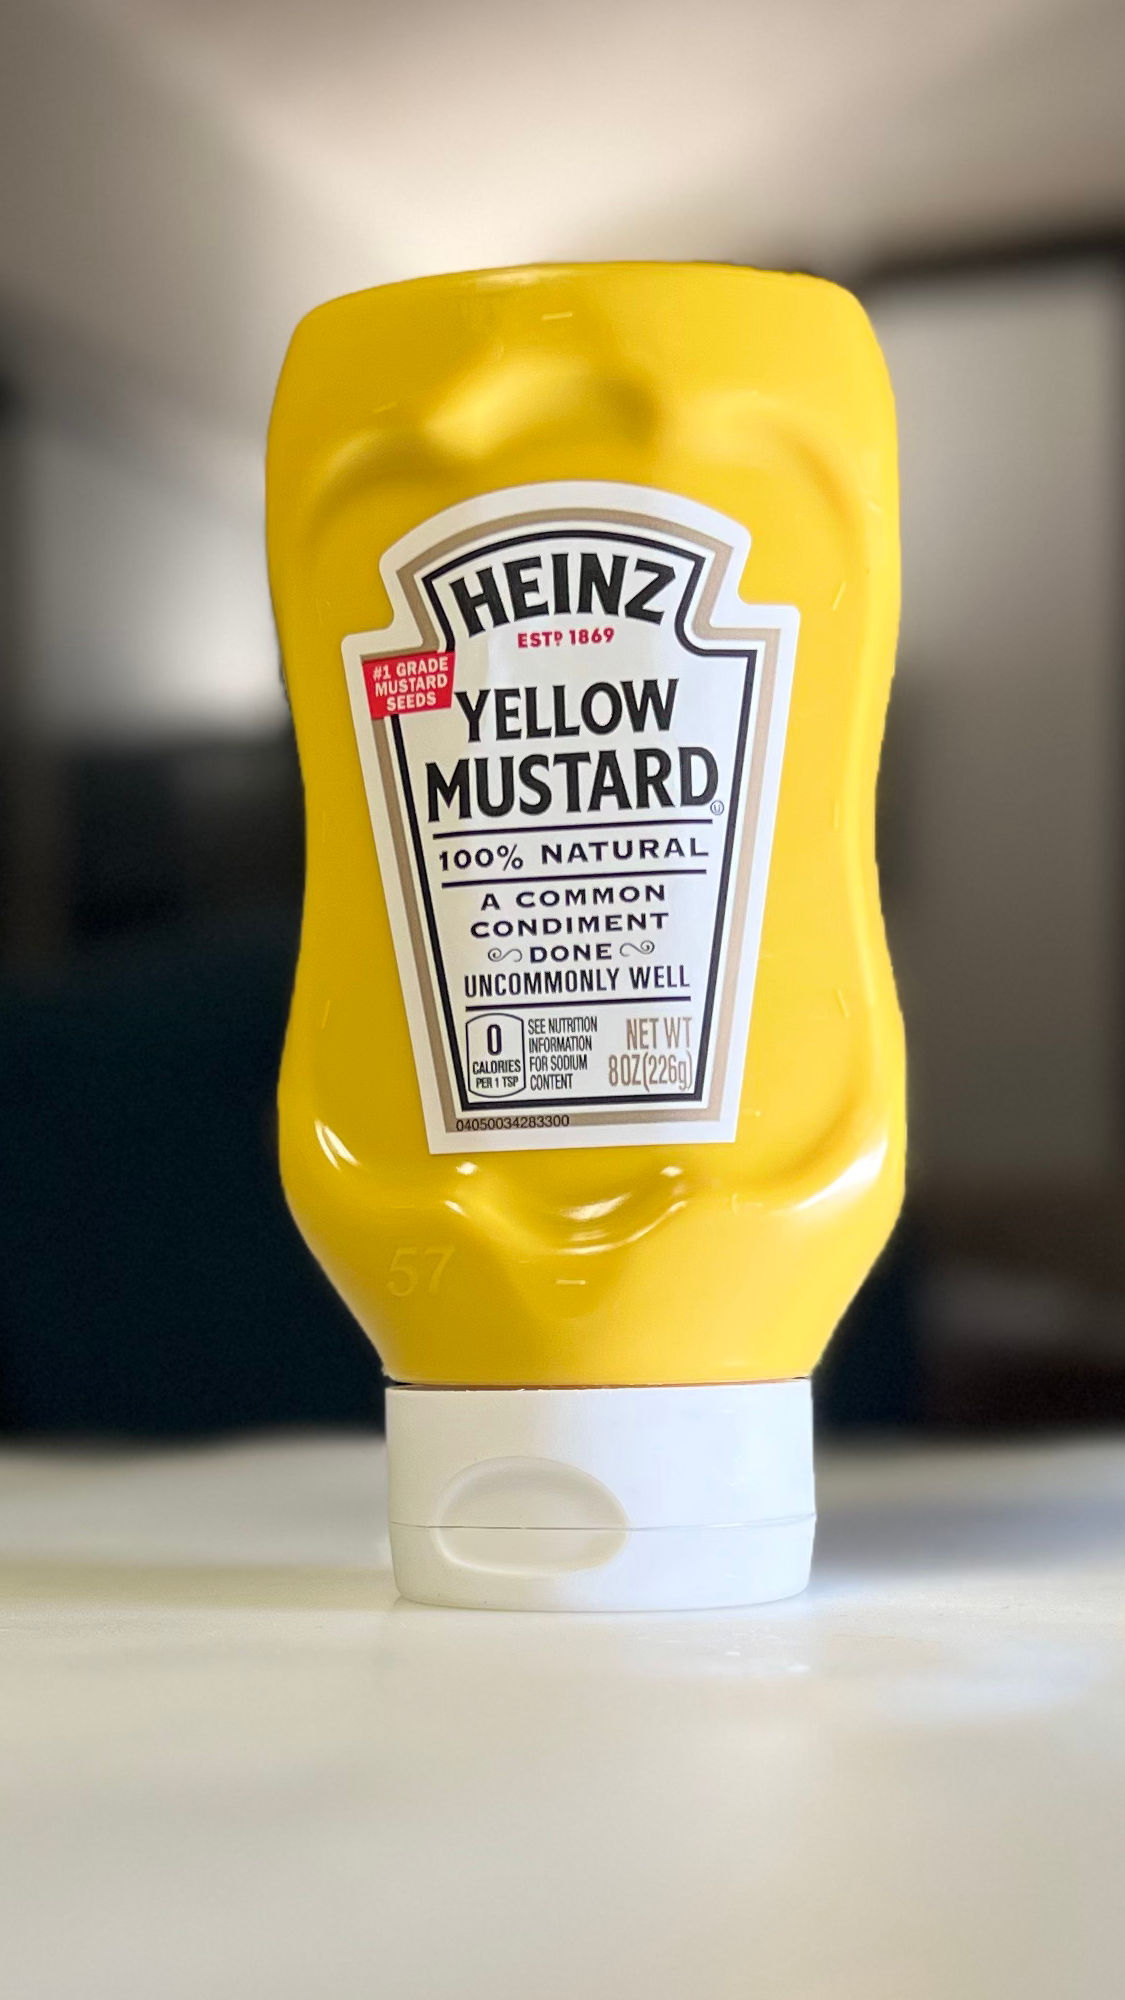 Mustard Heinz